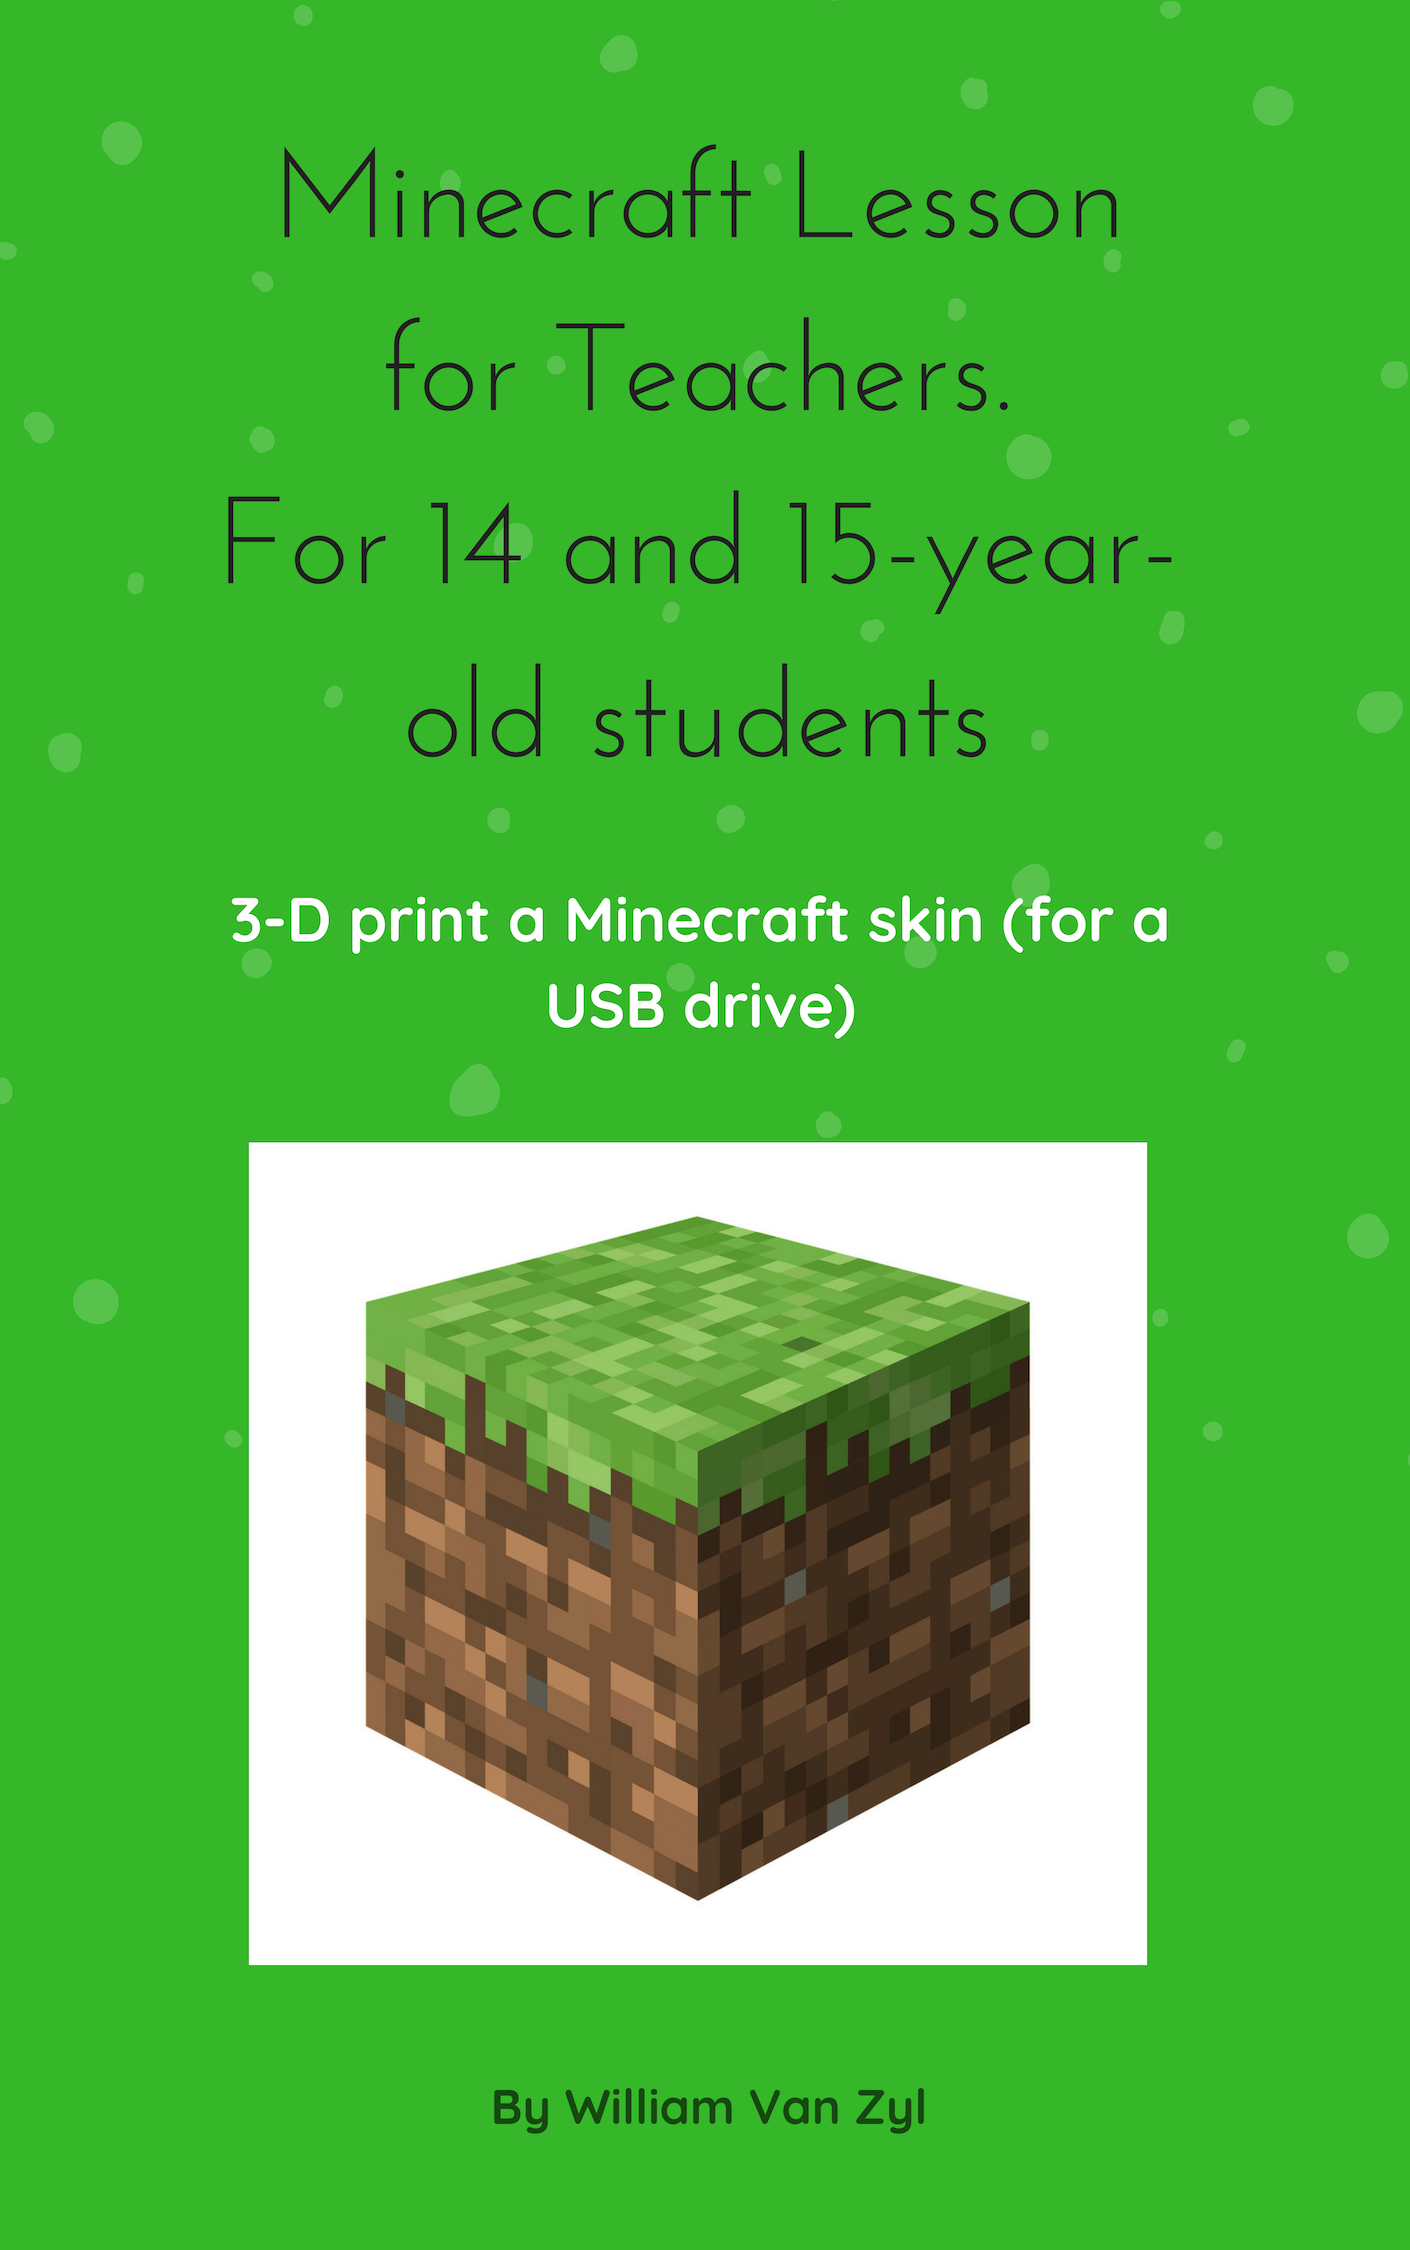 Minecraft Lesson Minecraft Skin For Usb Drive 3 D Printing Ebooks